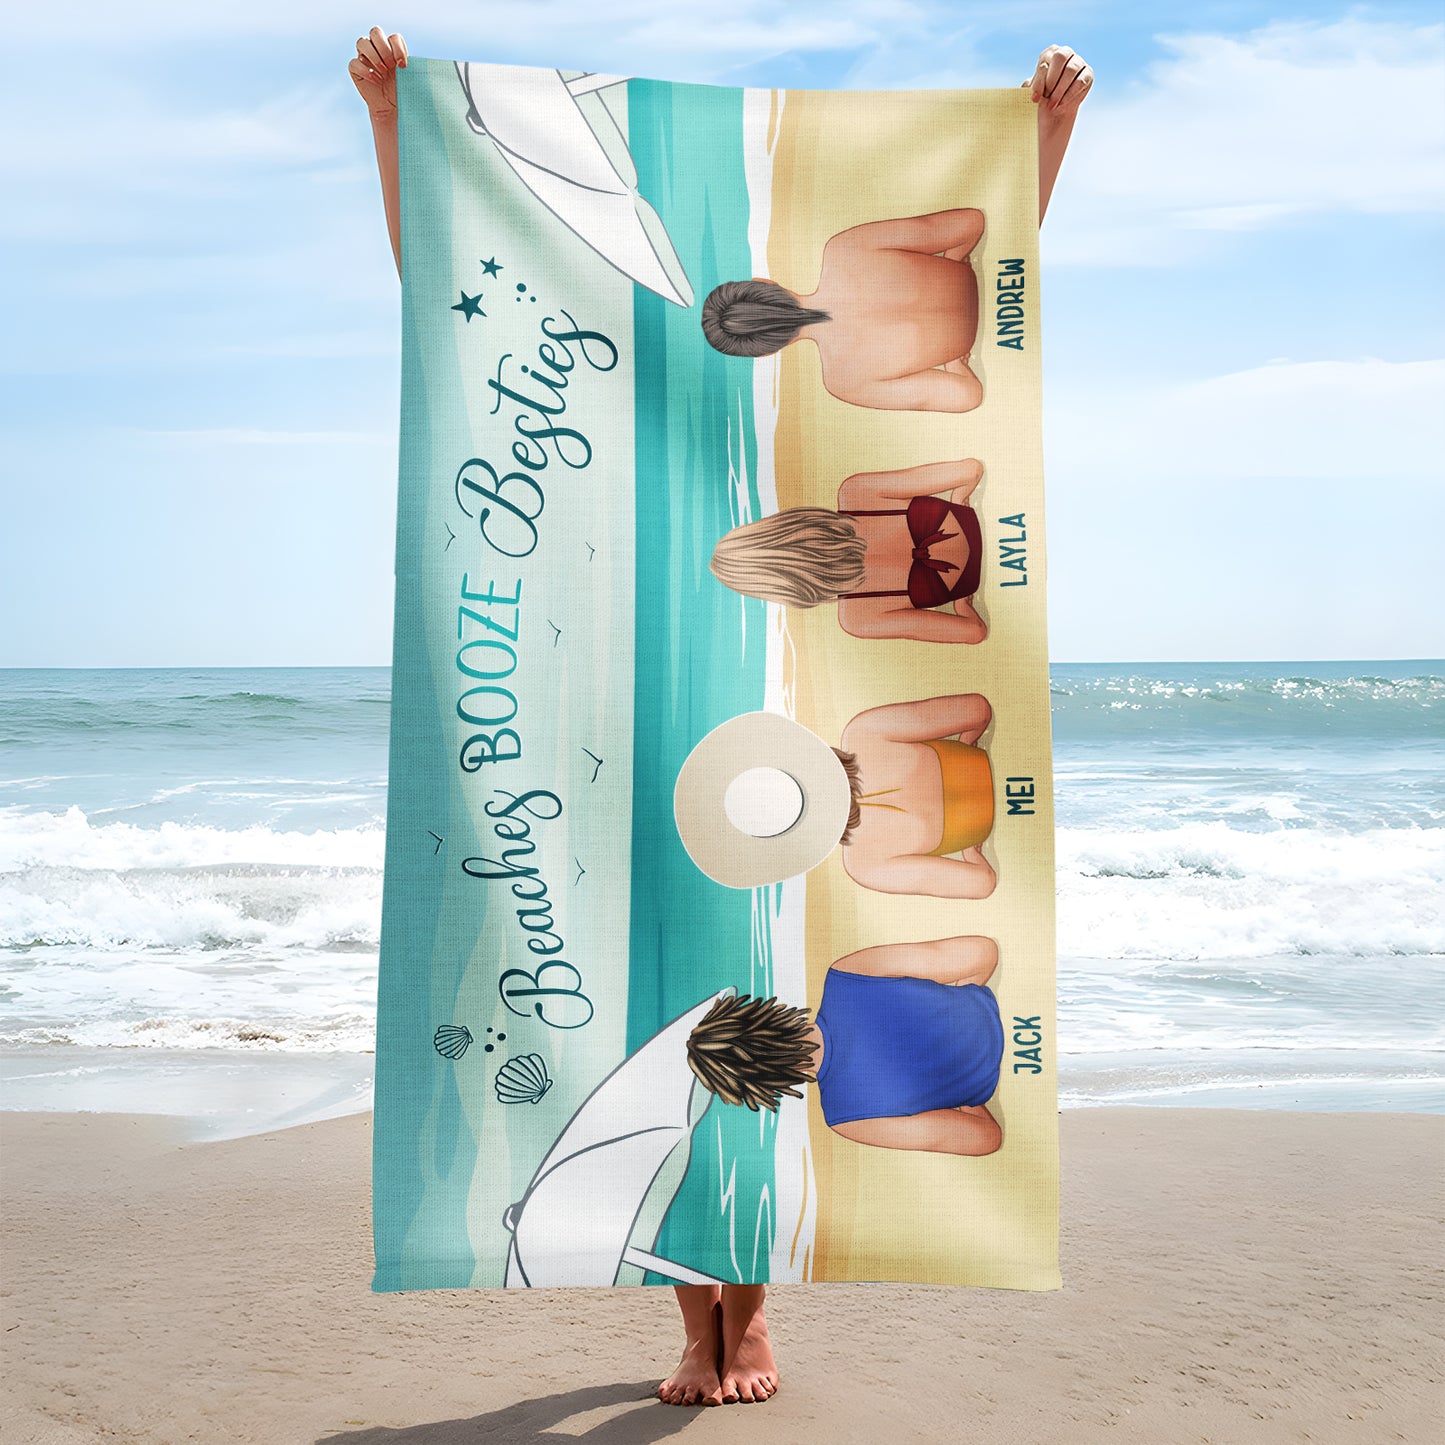 Friends - Friends Don't Let Friends Beach Alone - Personalized Beach Towel